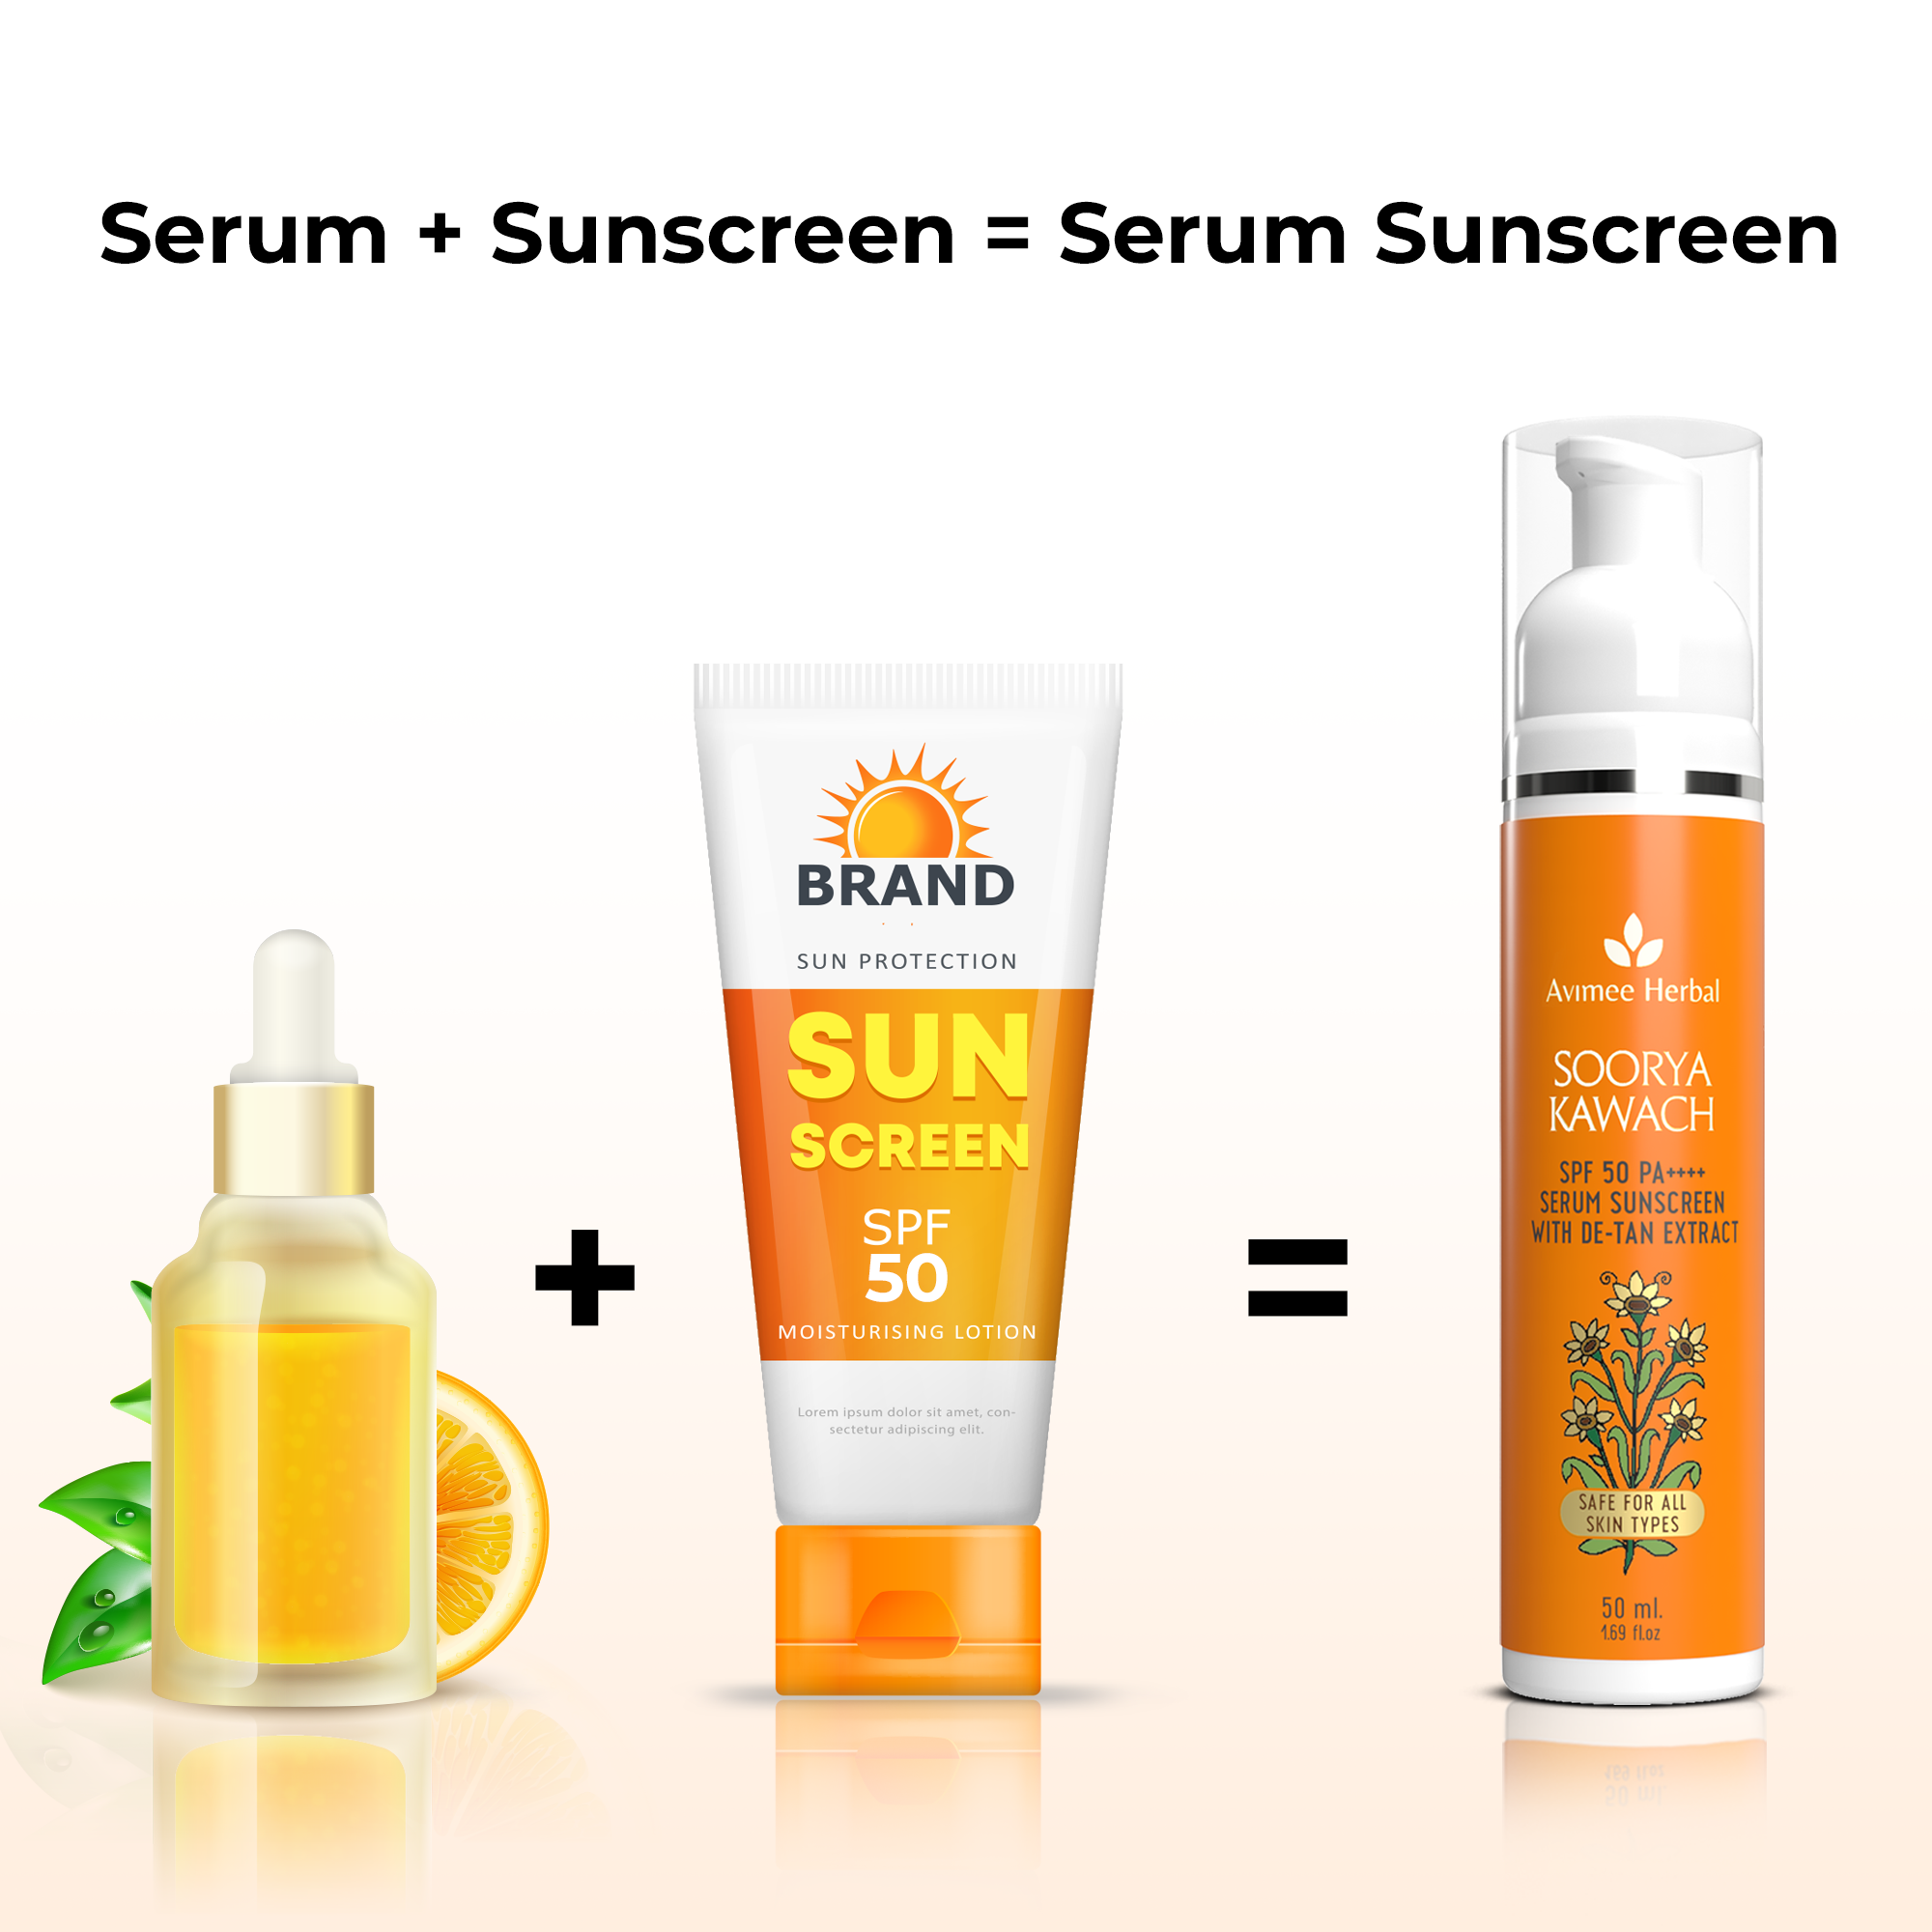 Soorya Kawach SPF50 PA++++ Hybrid Sunscreen with De-Tan Extract